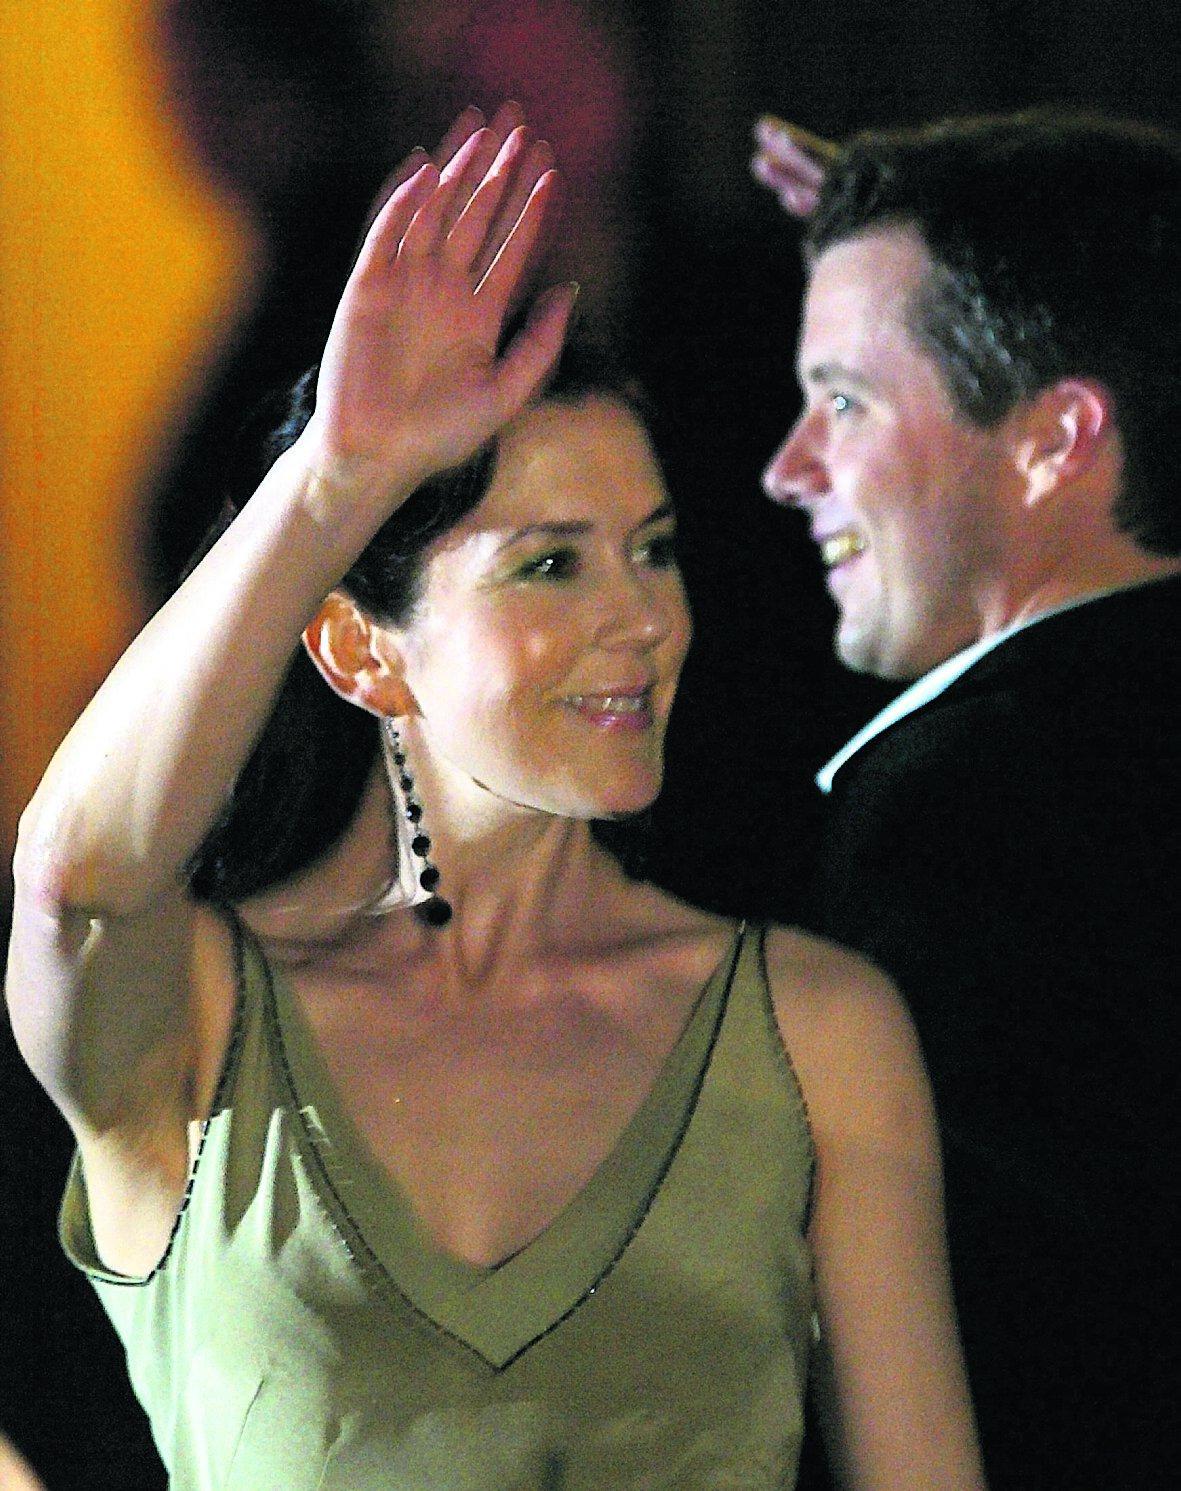 Danmarks kronprins Frederik hade en fest på klubben Vega i Köpenhamn inför sitt bröllop med Mary.